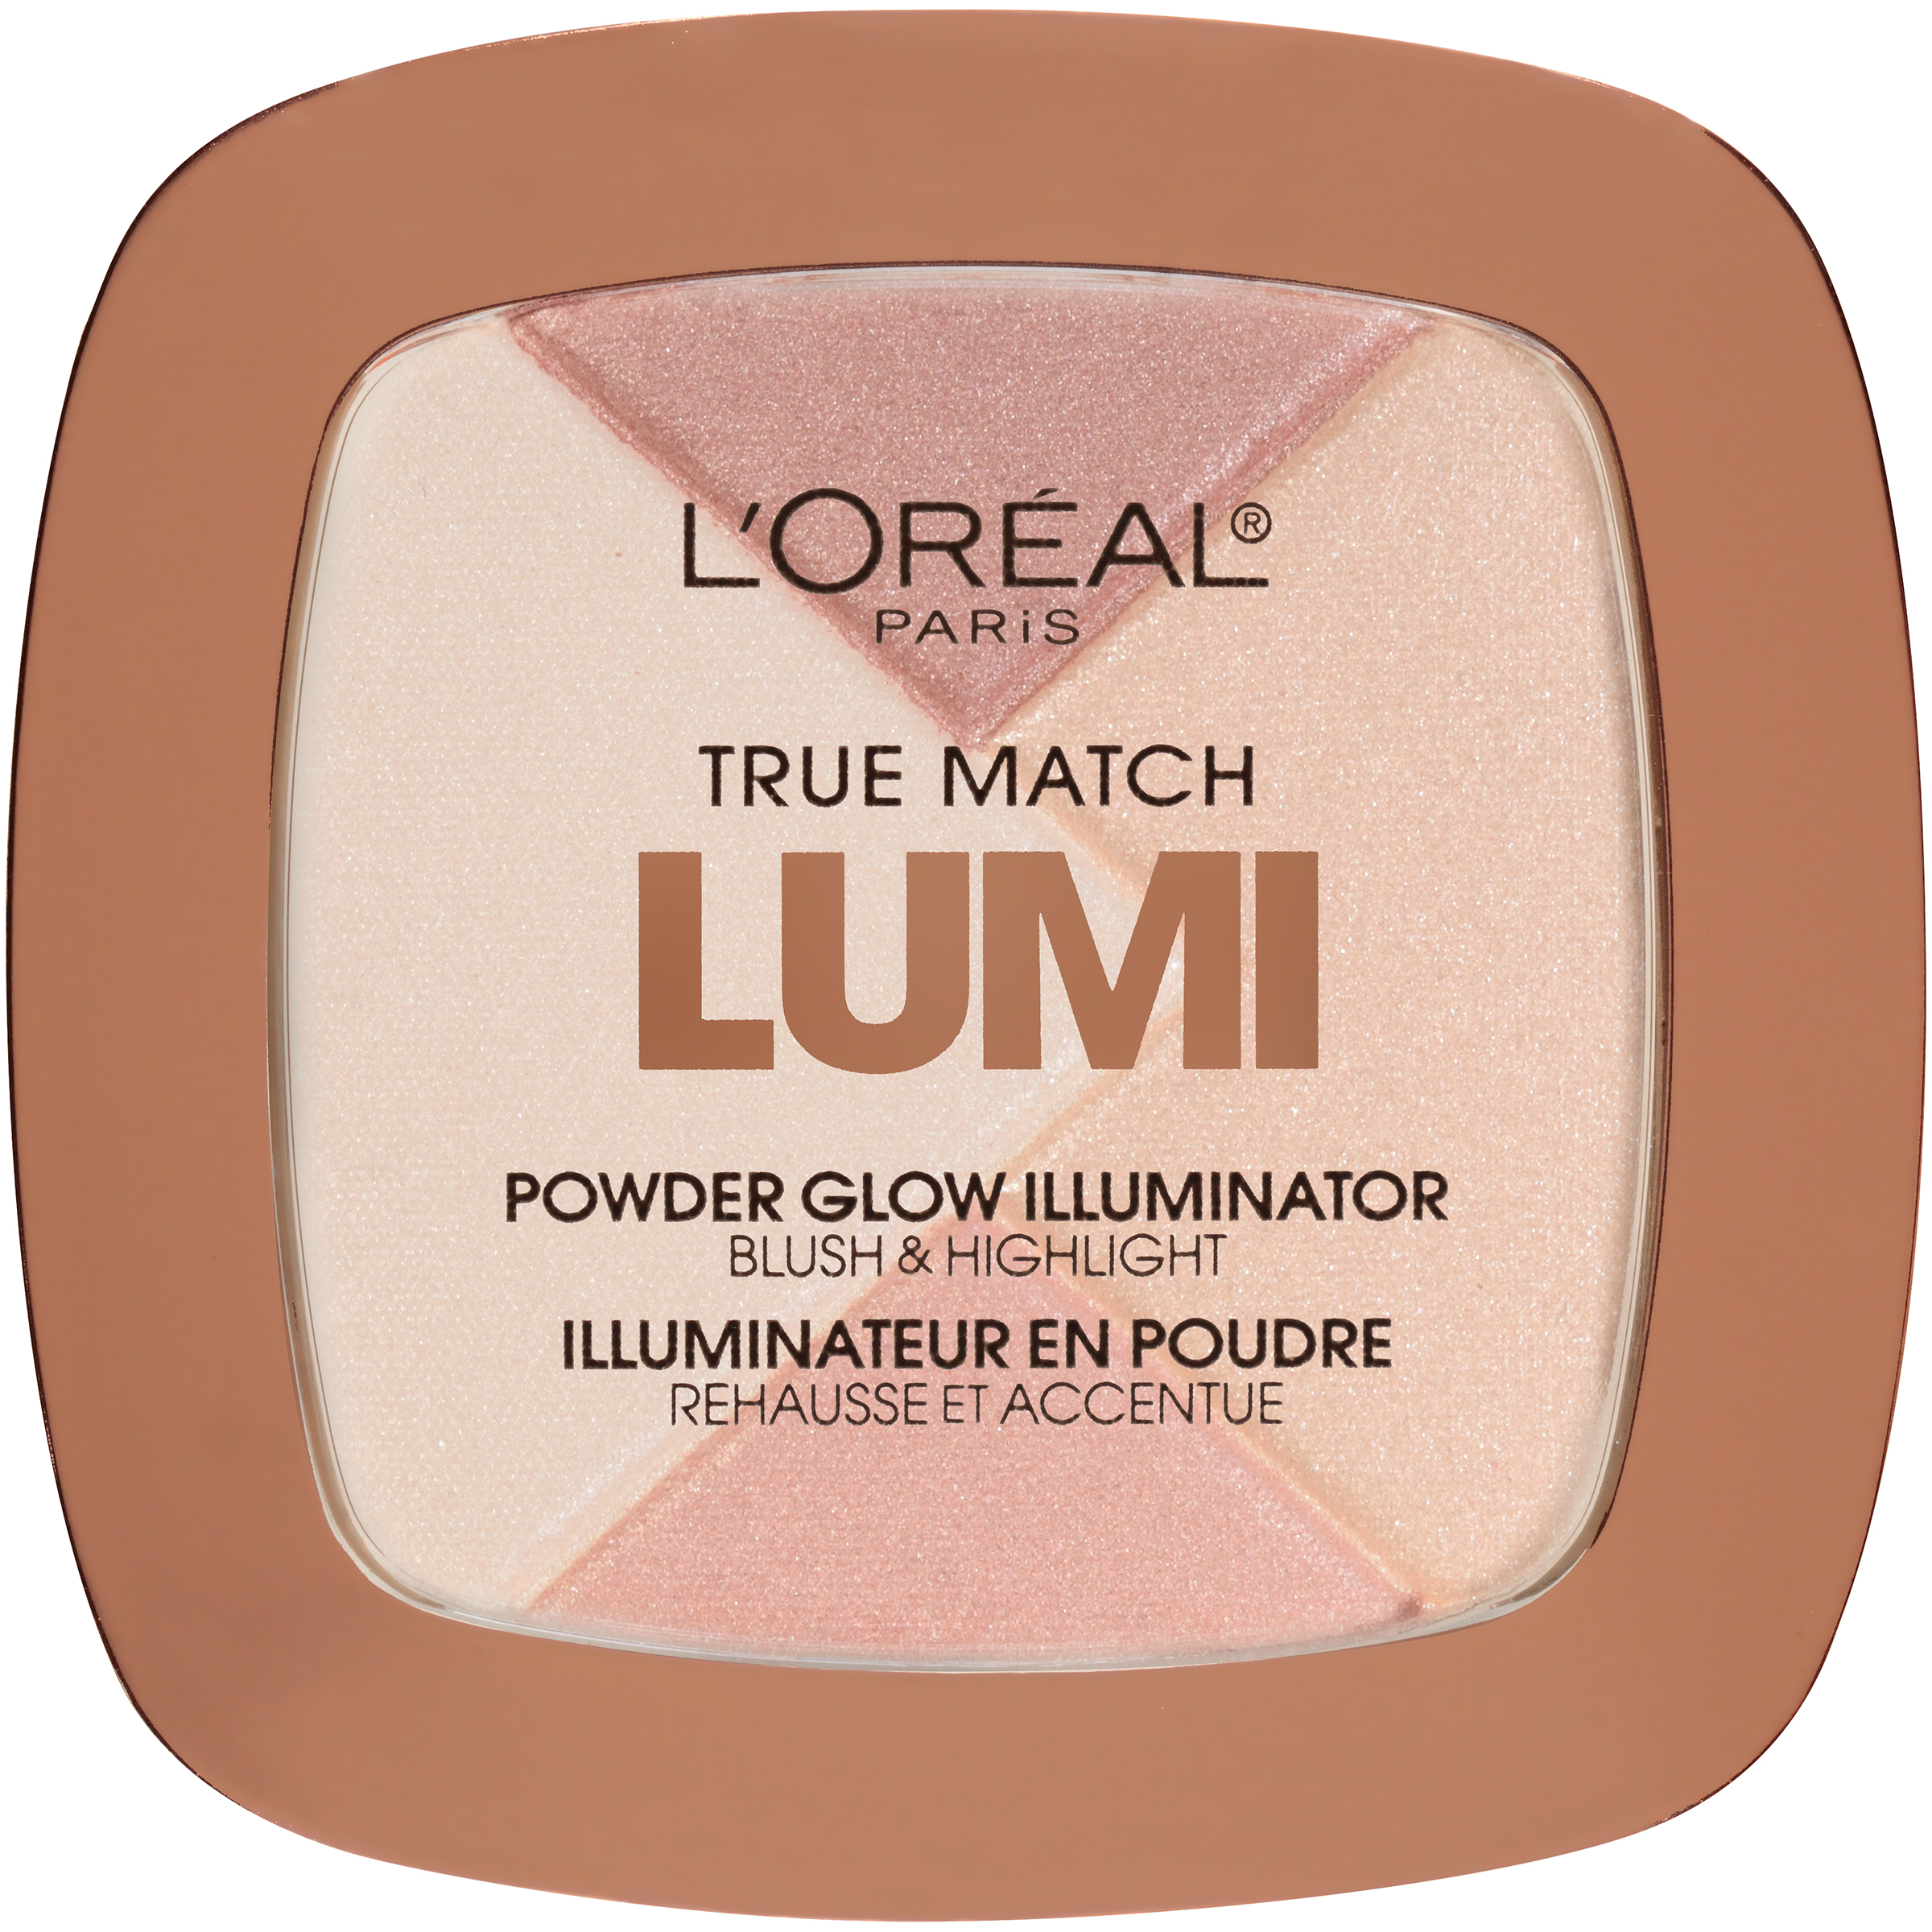 L'Oreal True Match Lumi Light & Shadow Powder Glow Enhancer/Illuminator